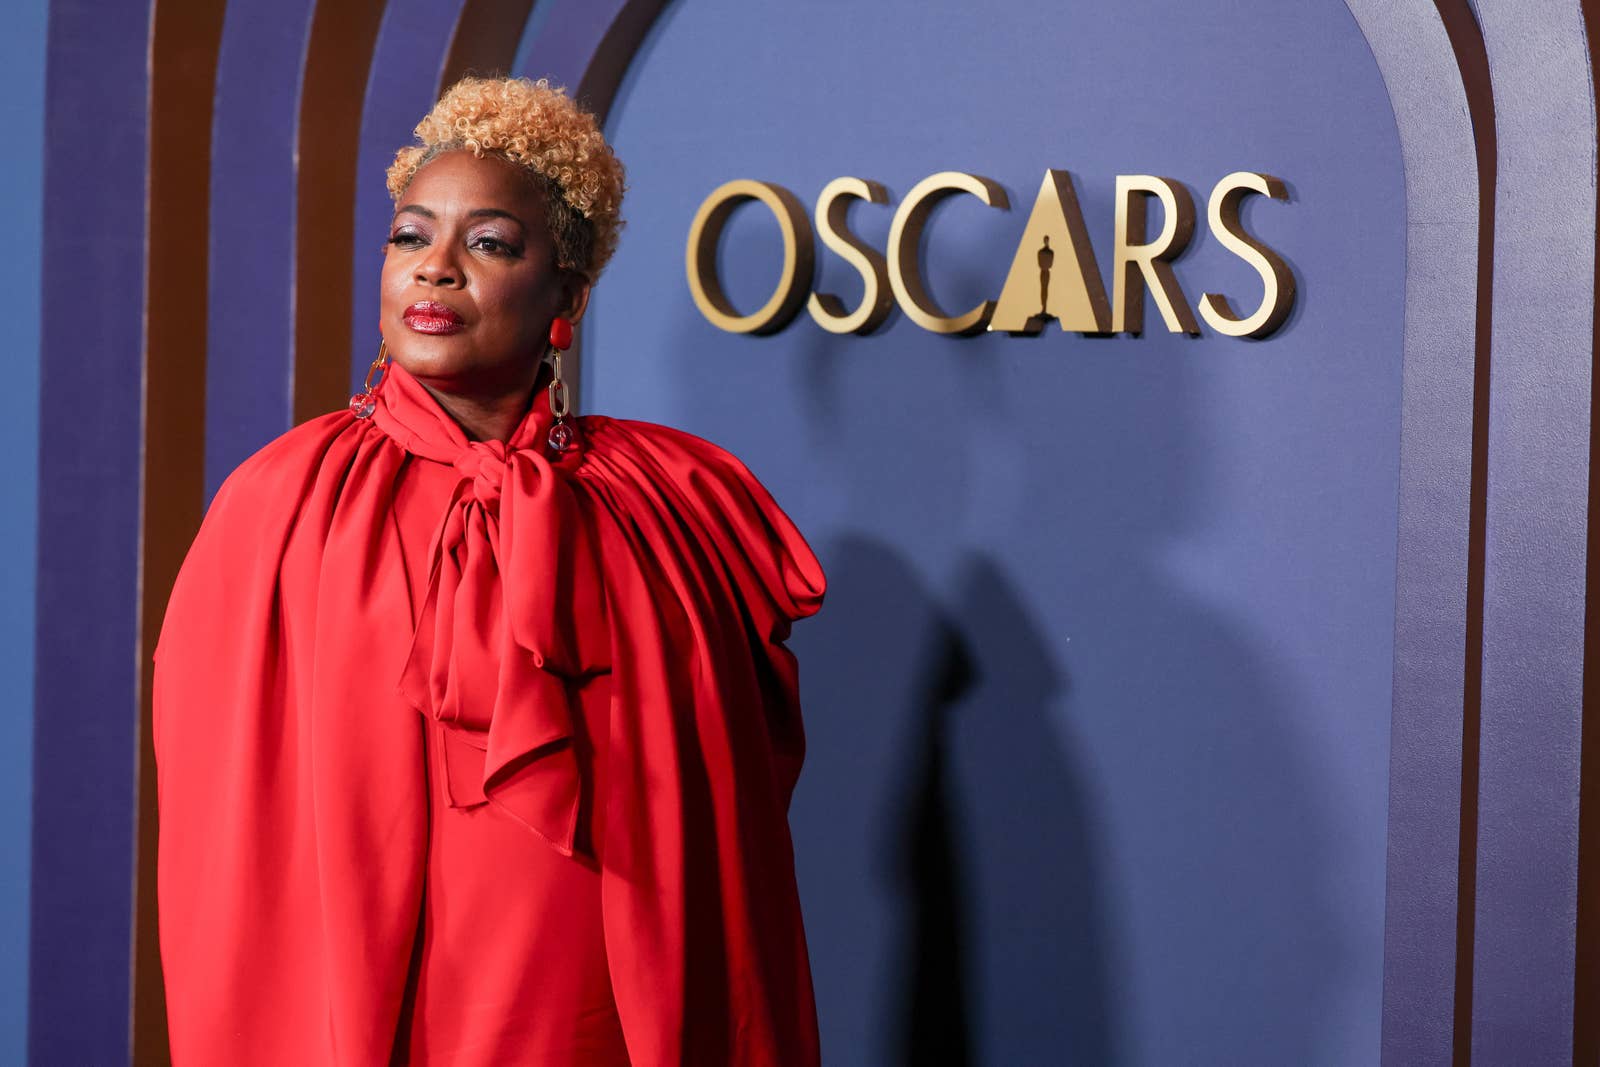 Aunjanue Ellis-Taylor at an Oscars event wearing a cape dress